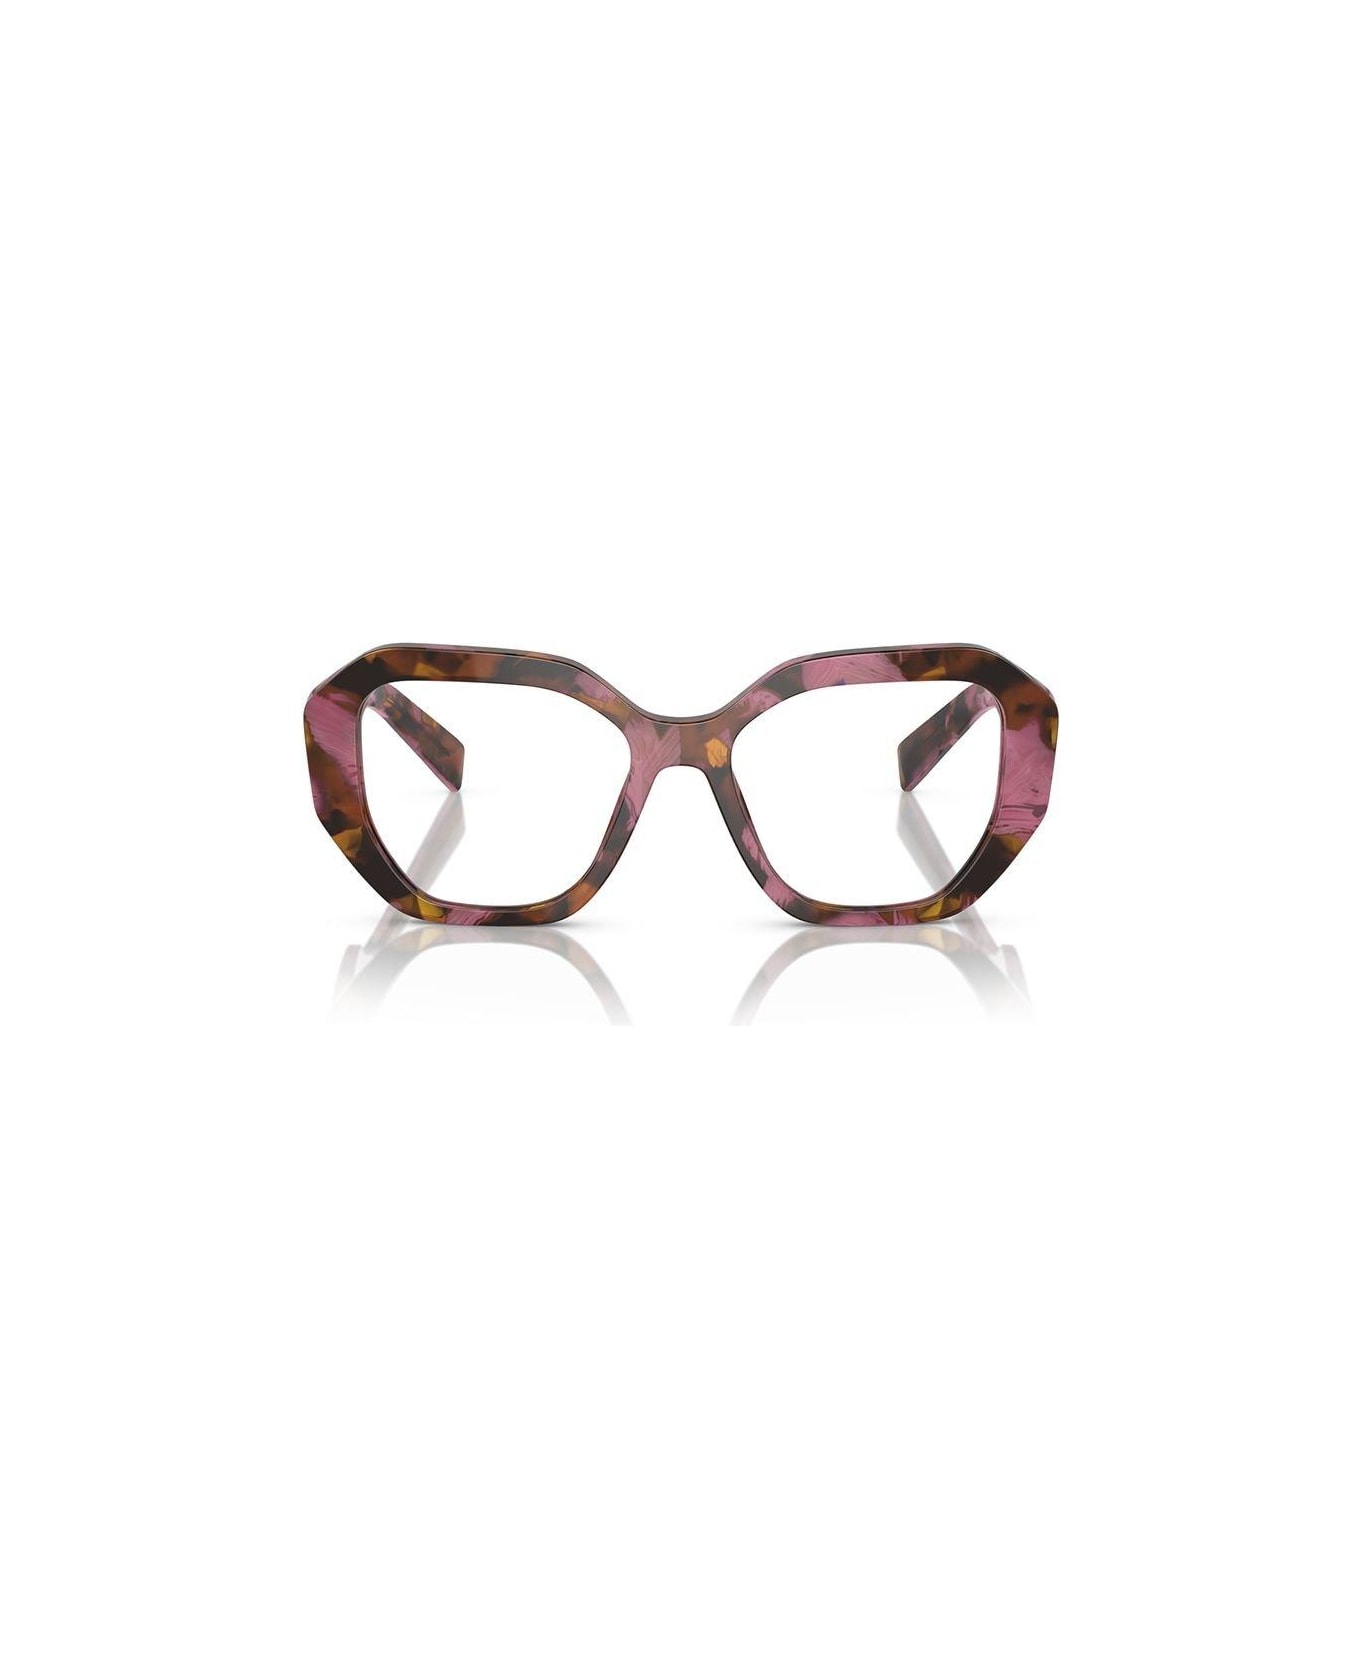 Prada Eyewear Irregular-frame Glasses - 18N1O1 アイウェア